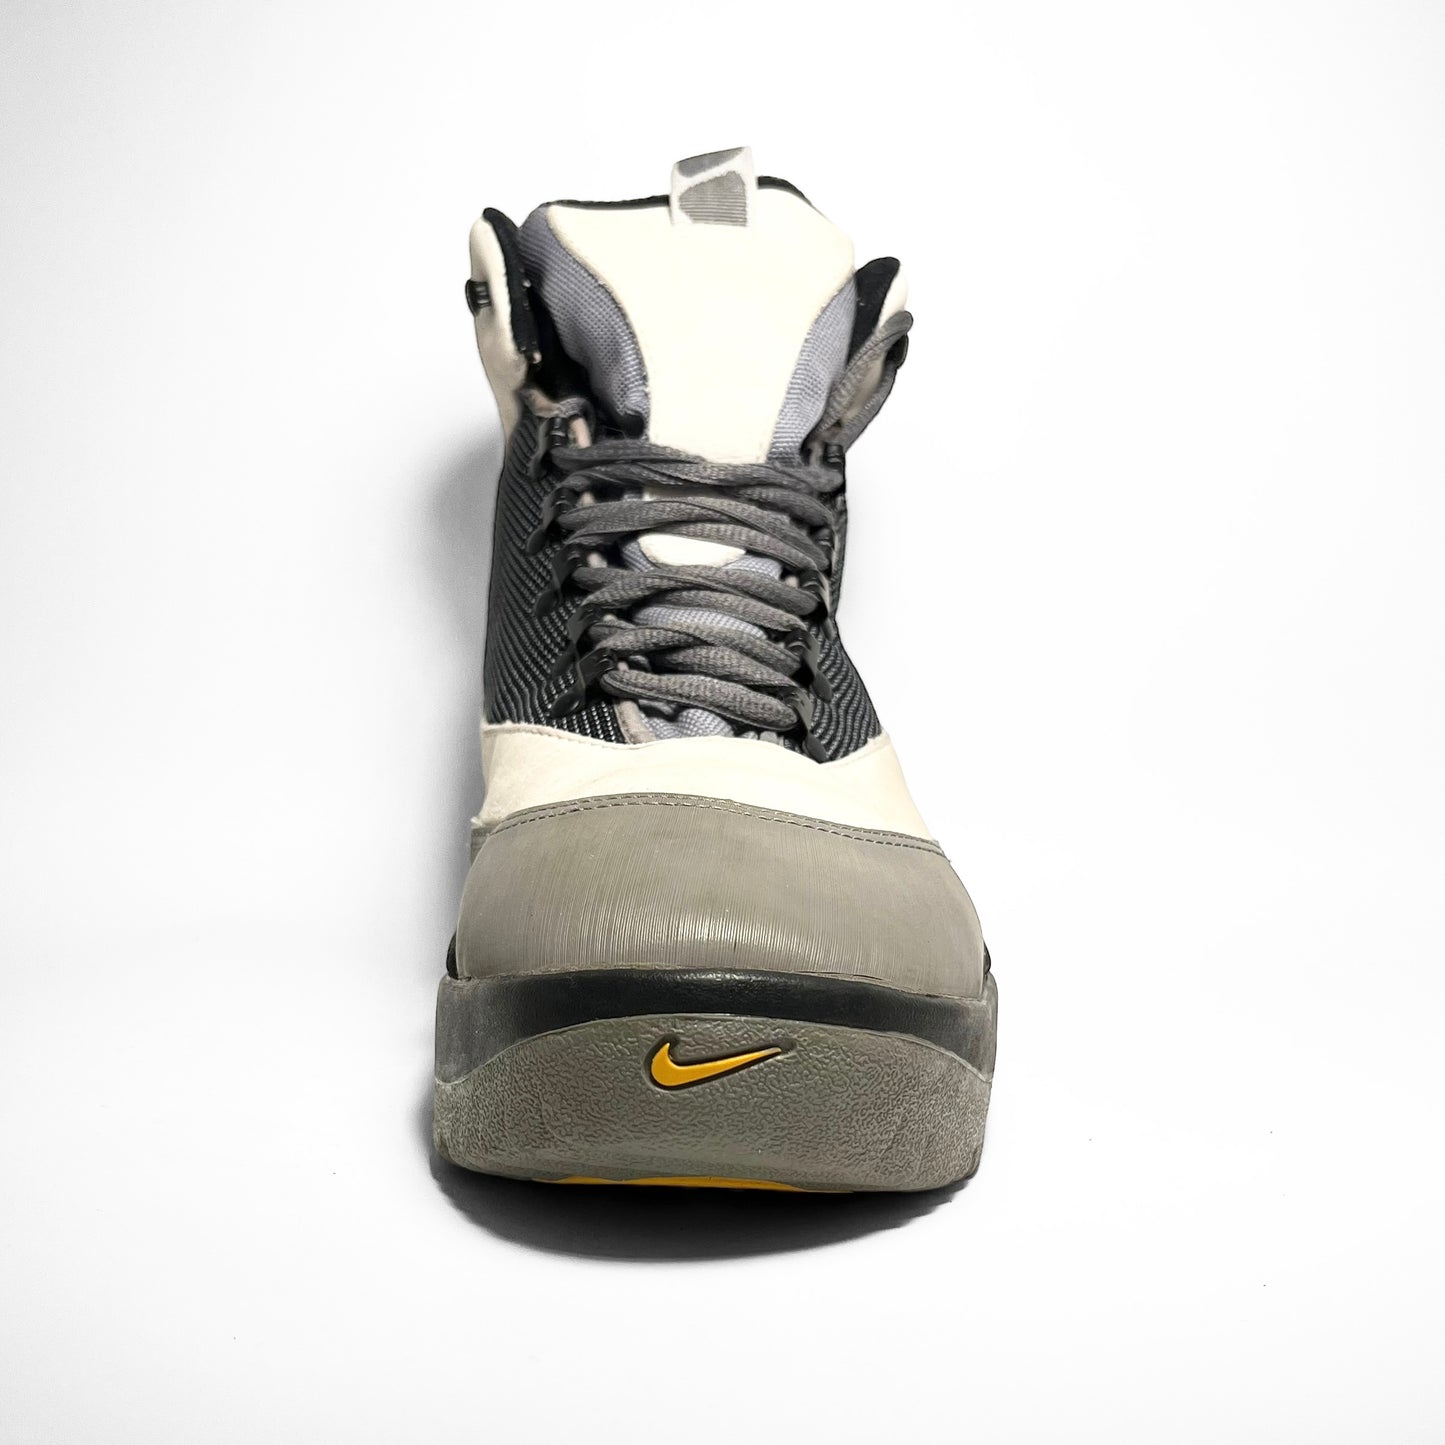 Nike ACG Govy Boot (2002)